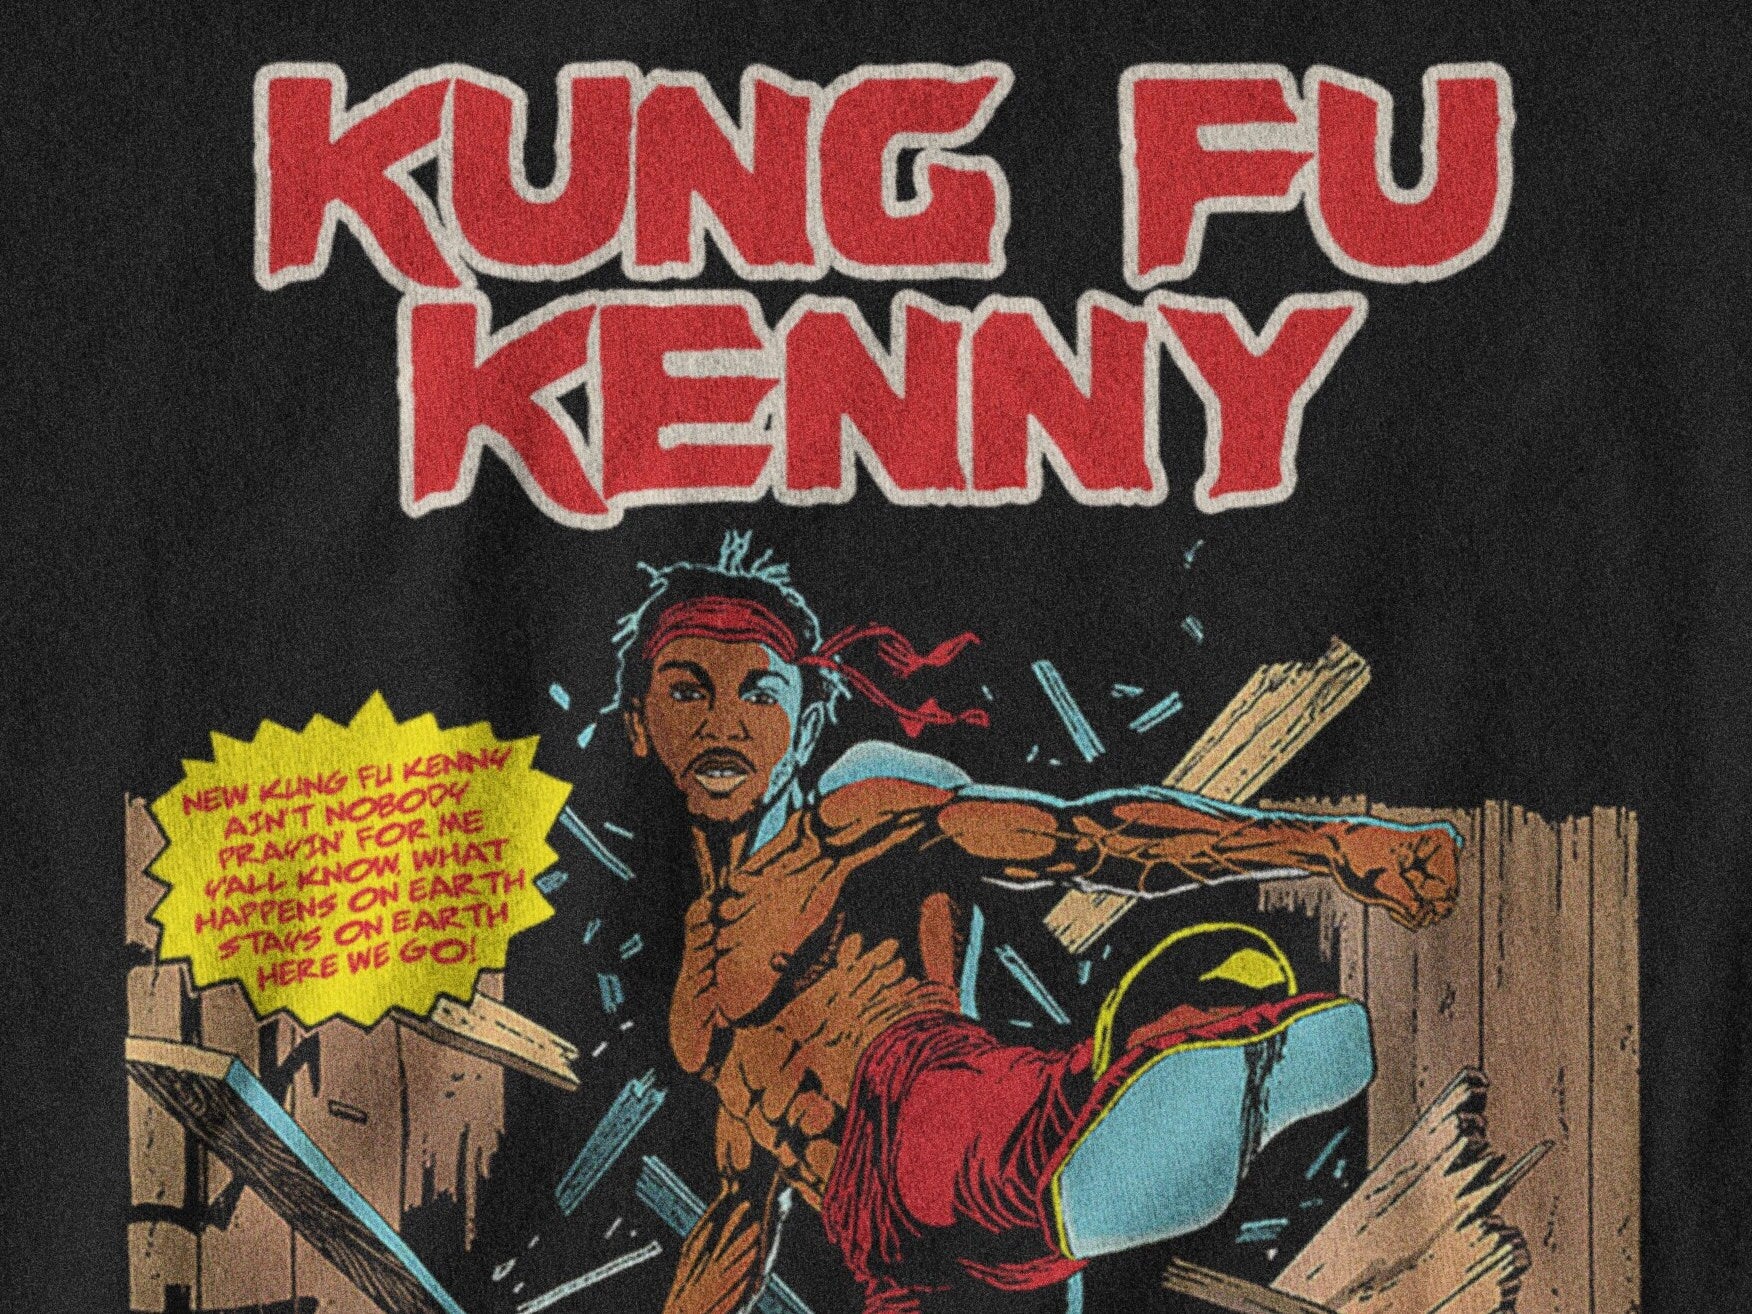 Kendrick Lamar Crown T-Shirt Kung-Fu Kenny Hip-Hop Tee Men'S All